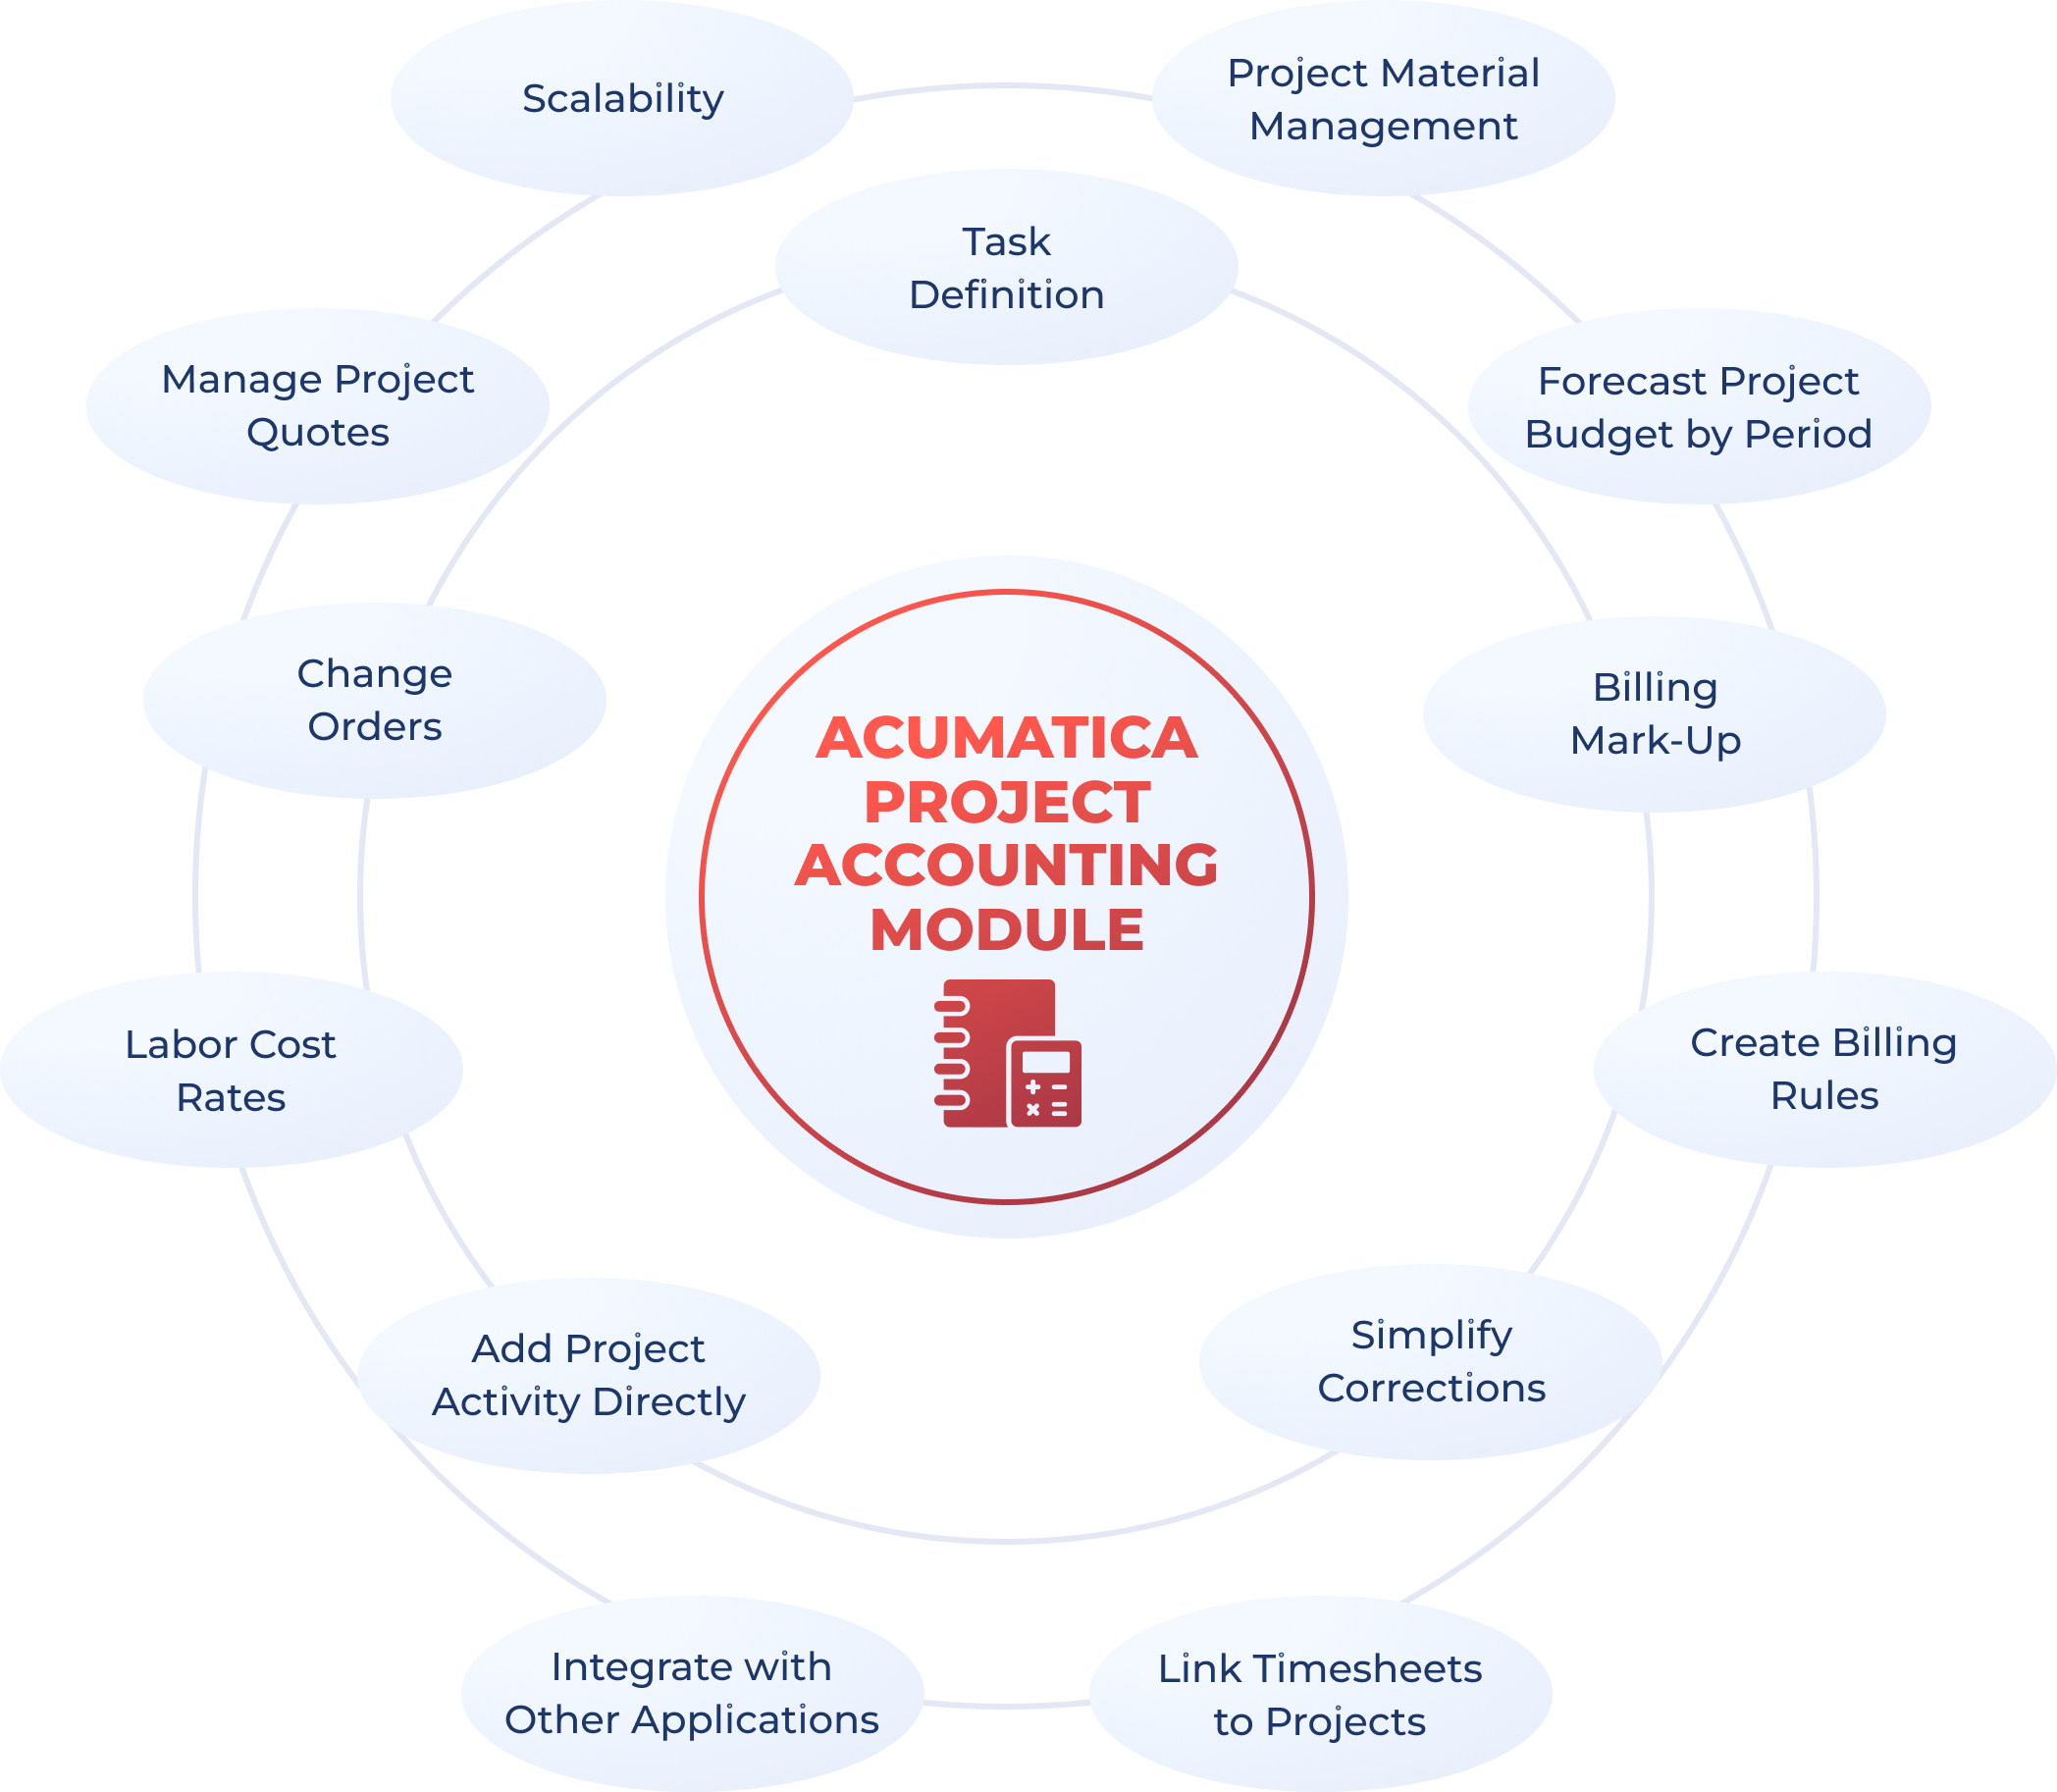 Acumatica project accounting module